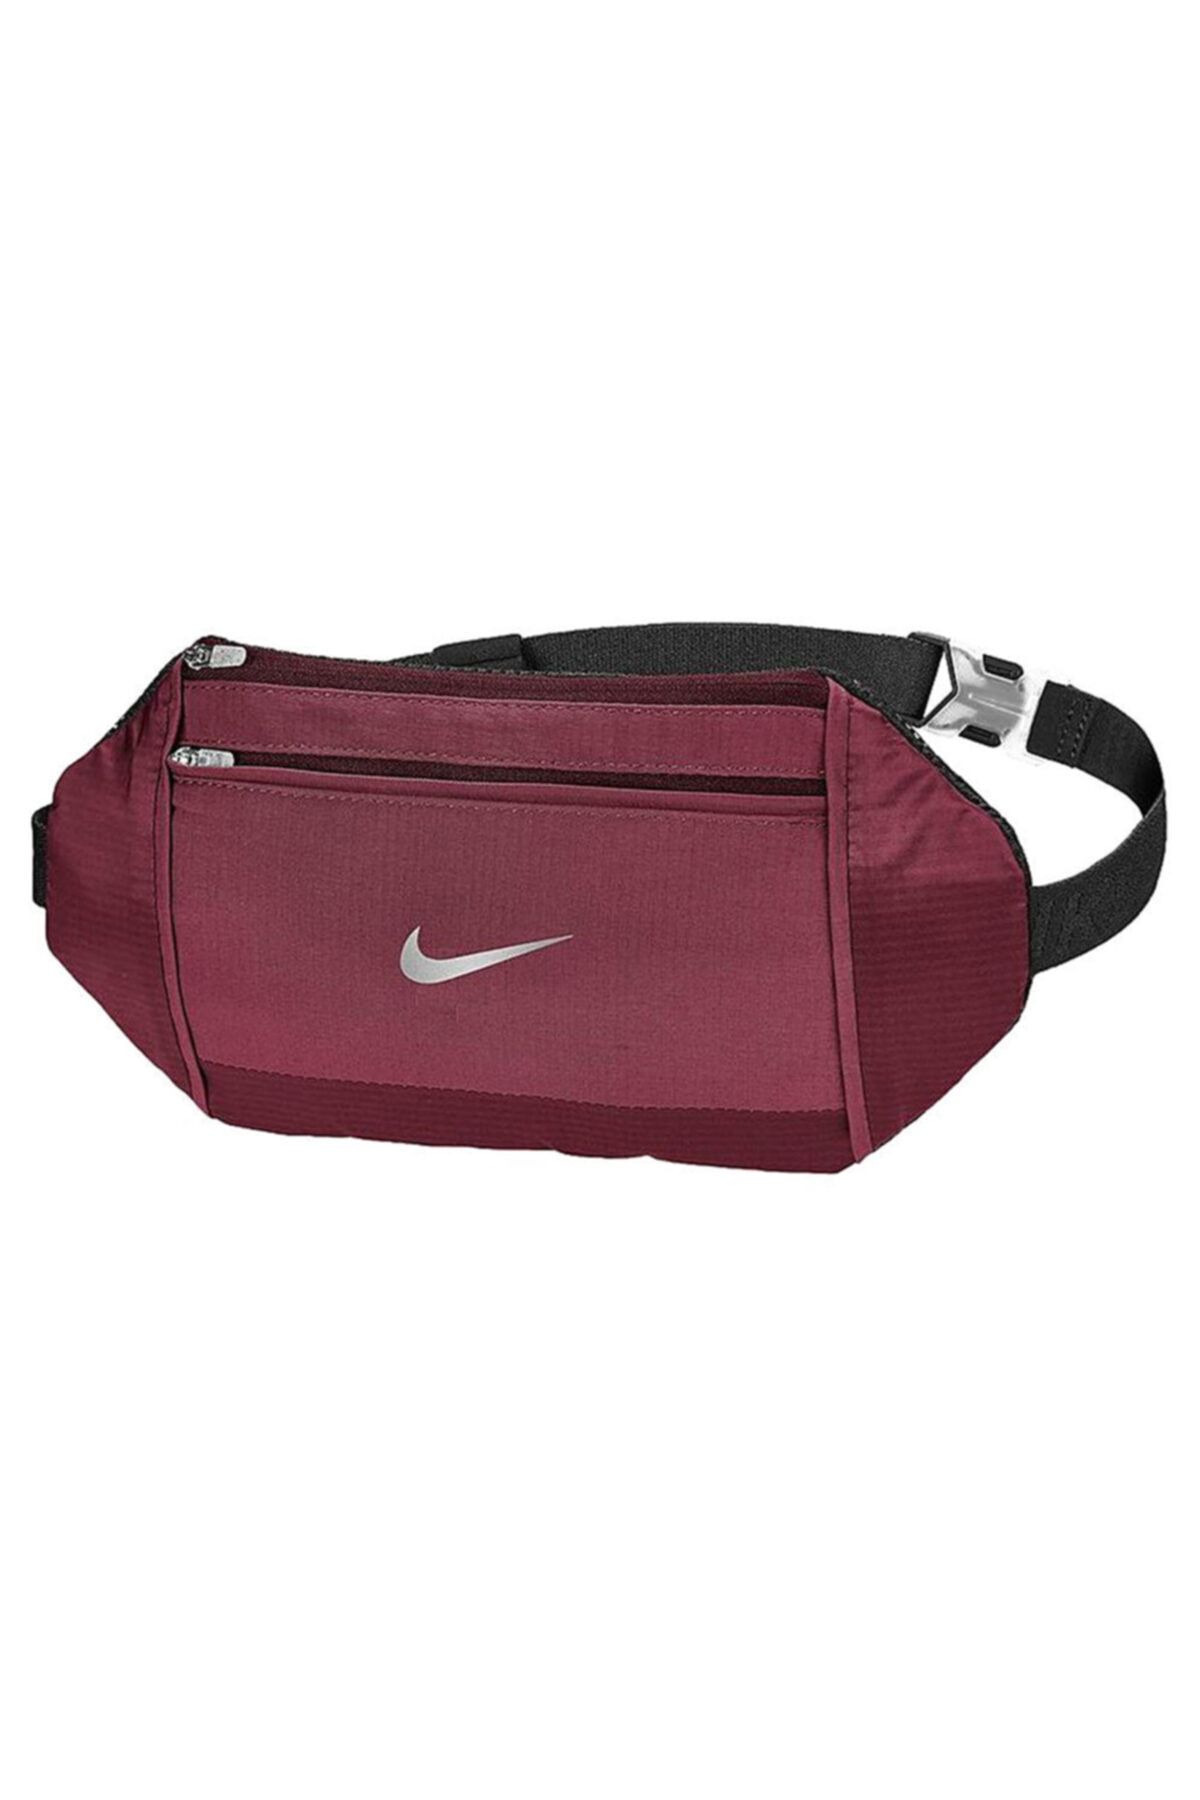 Nike Challenger Waist Pack Large Unisex Kırmızı Koşu Bel Çantası N.100.1640.667.os